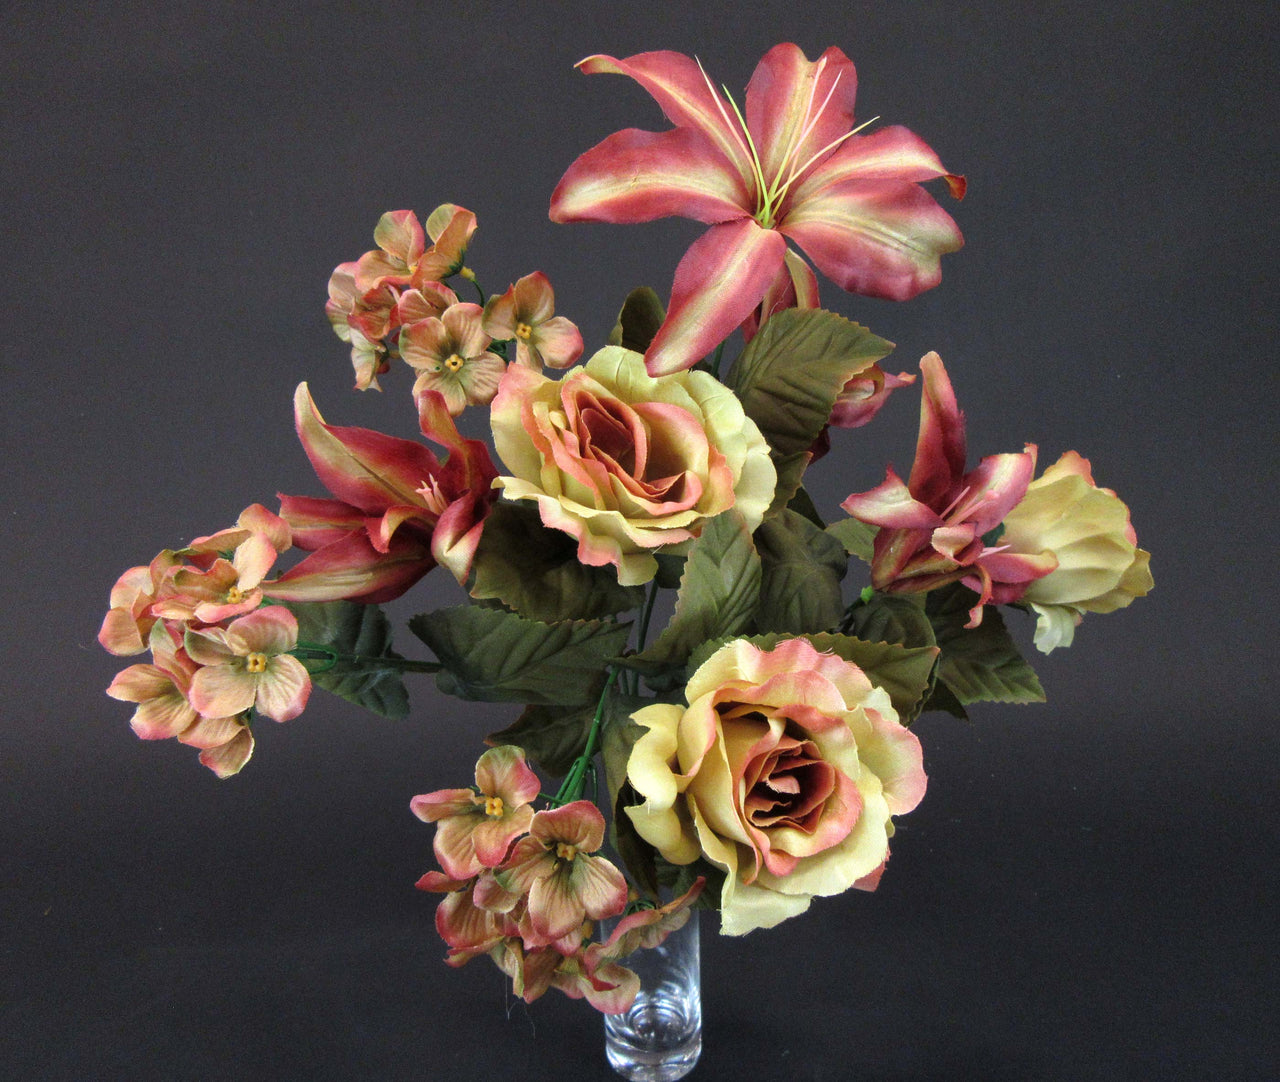 HCFL5850 - Orange Rose/Lily Bouquet